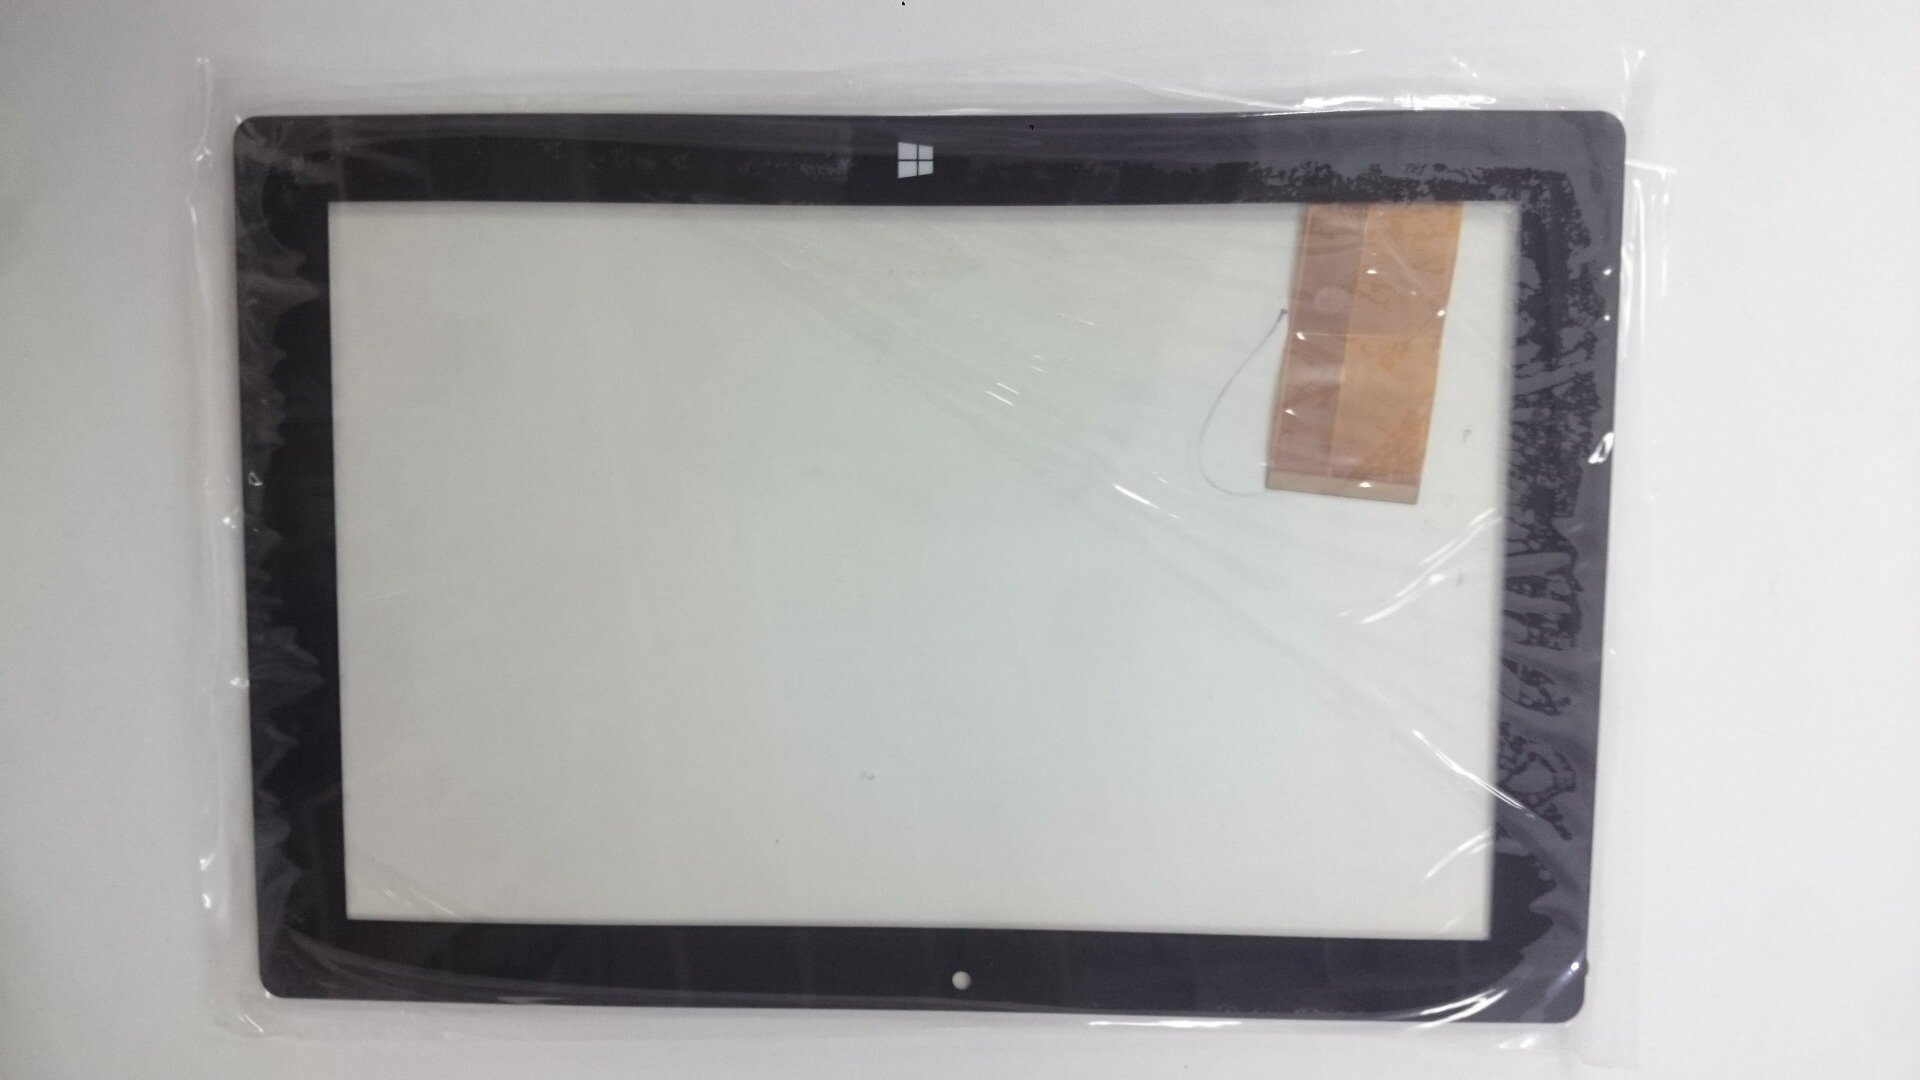 Тачскрин (сенсорное стекло) для планшета LH3066 101-85V02 (BDF ST1009)